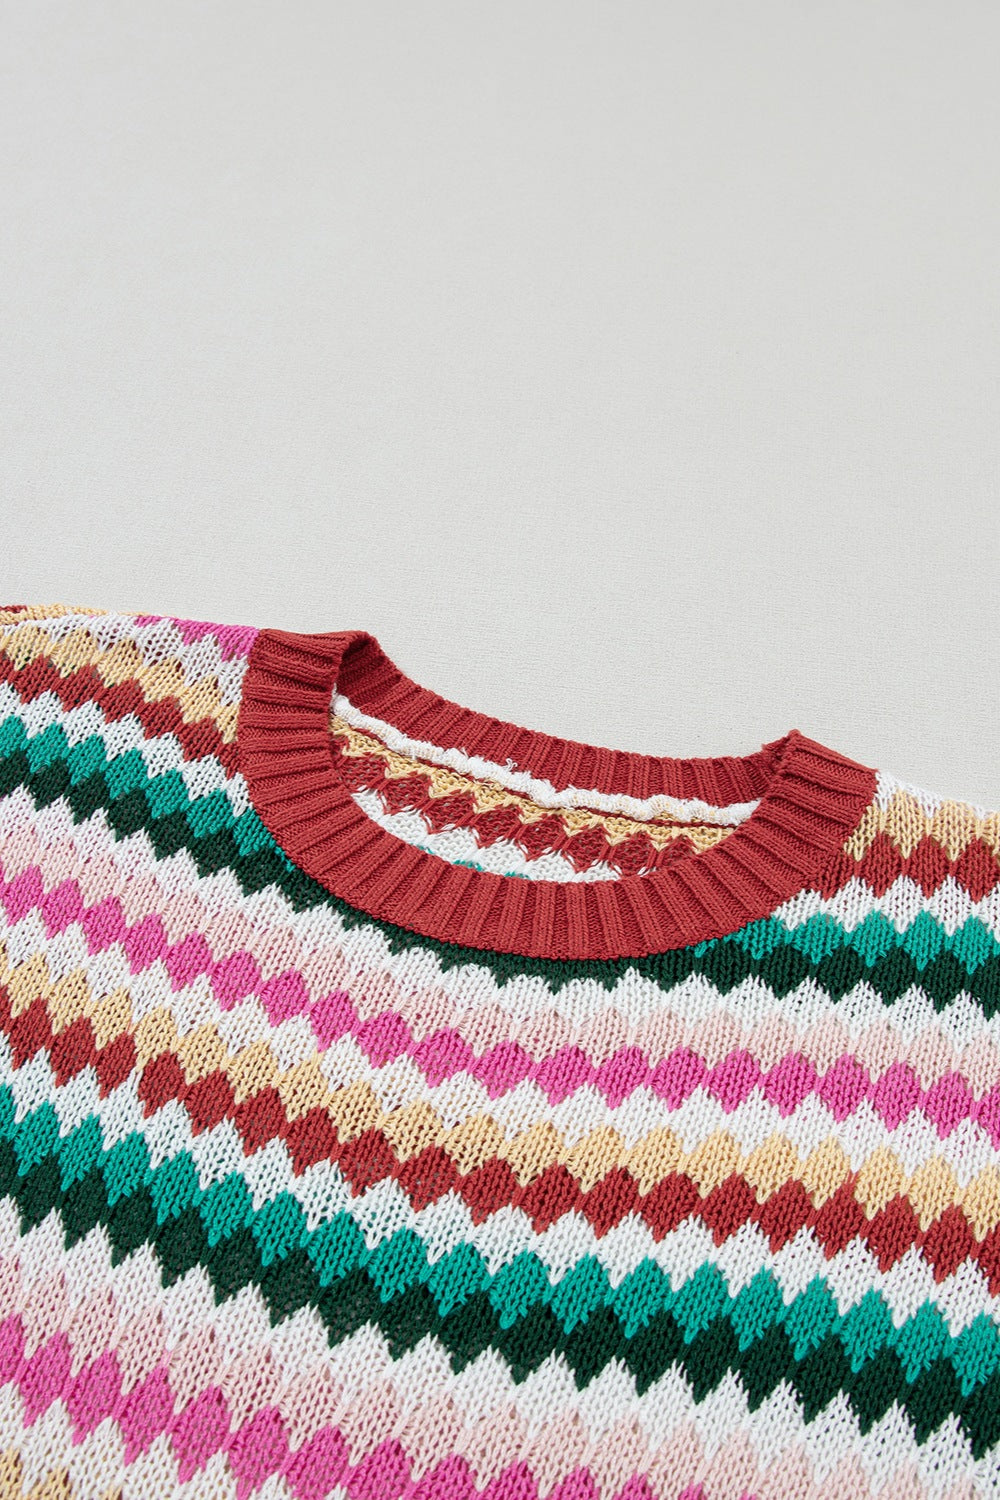 Striped Round Neck Short Sleeve Sweater